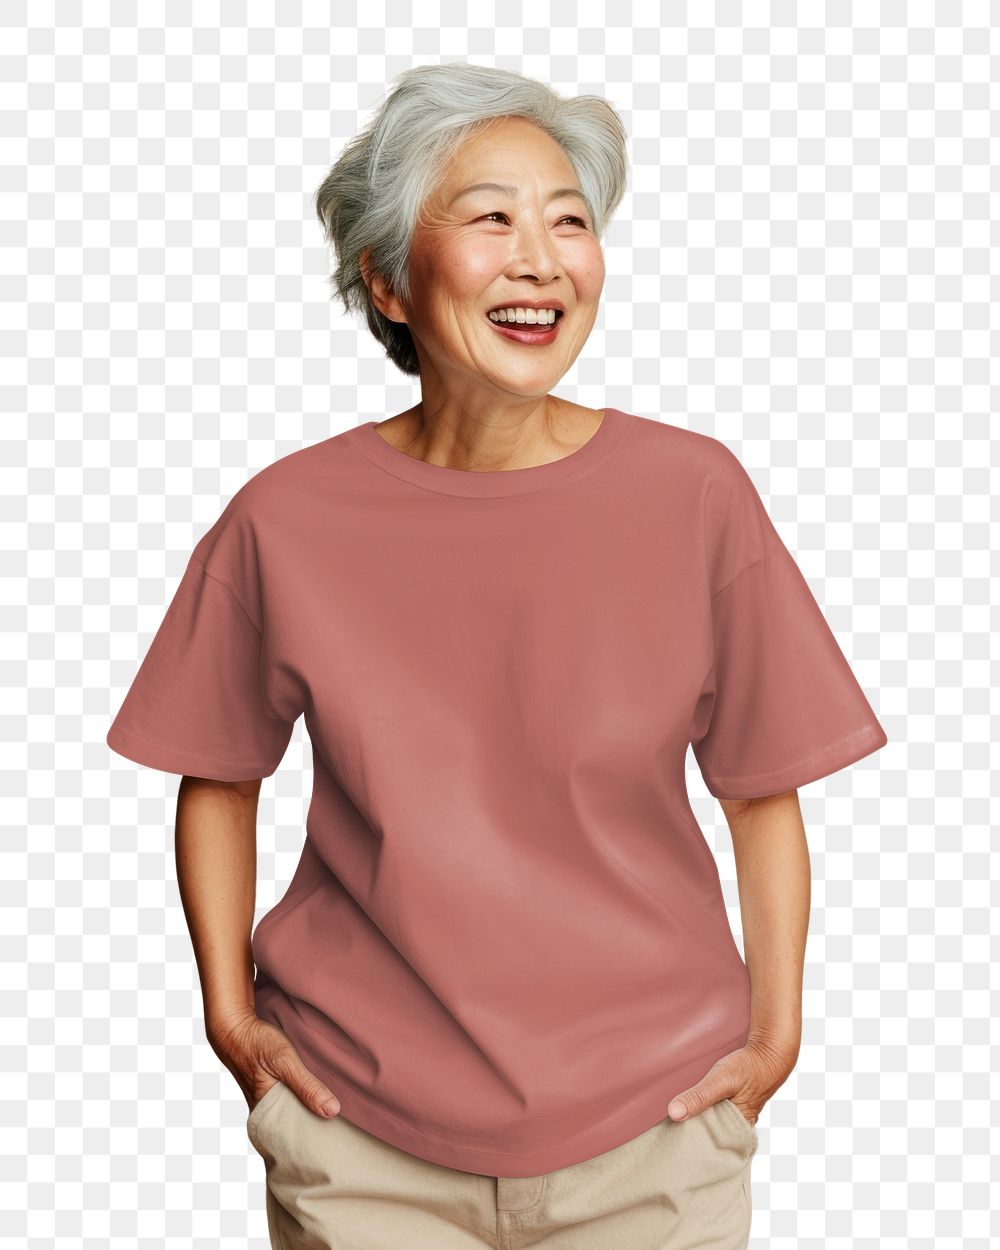 Senior woman png pink t-shirt, transparent background